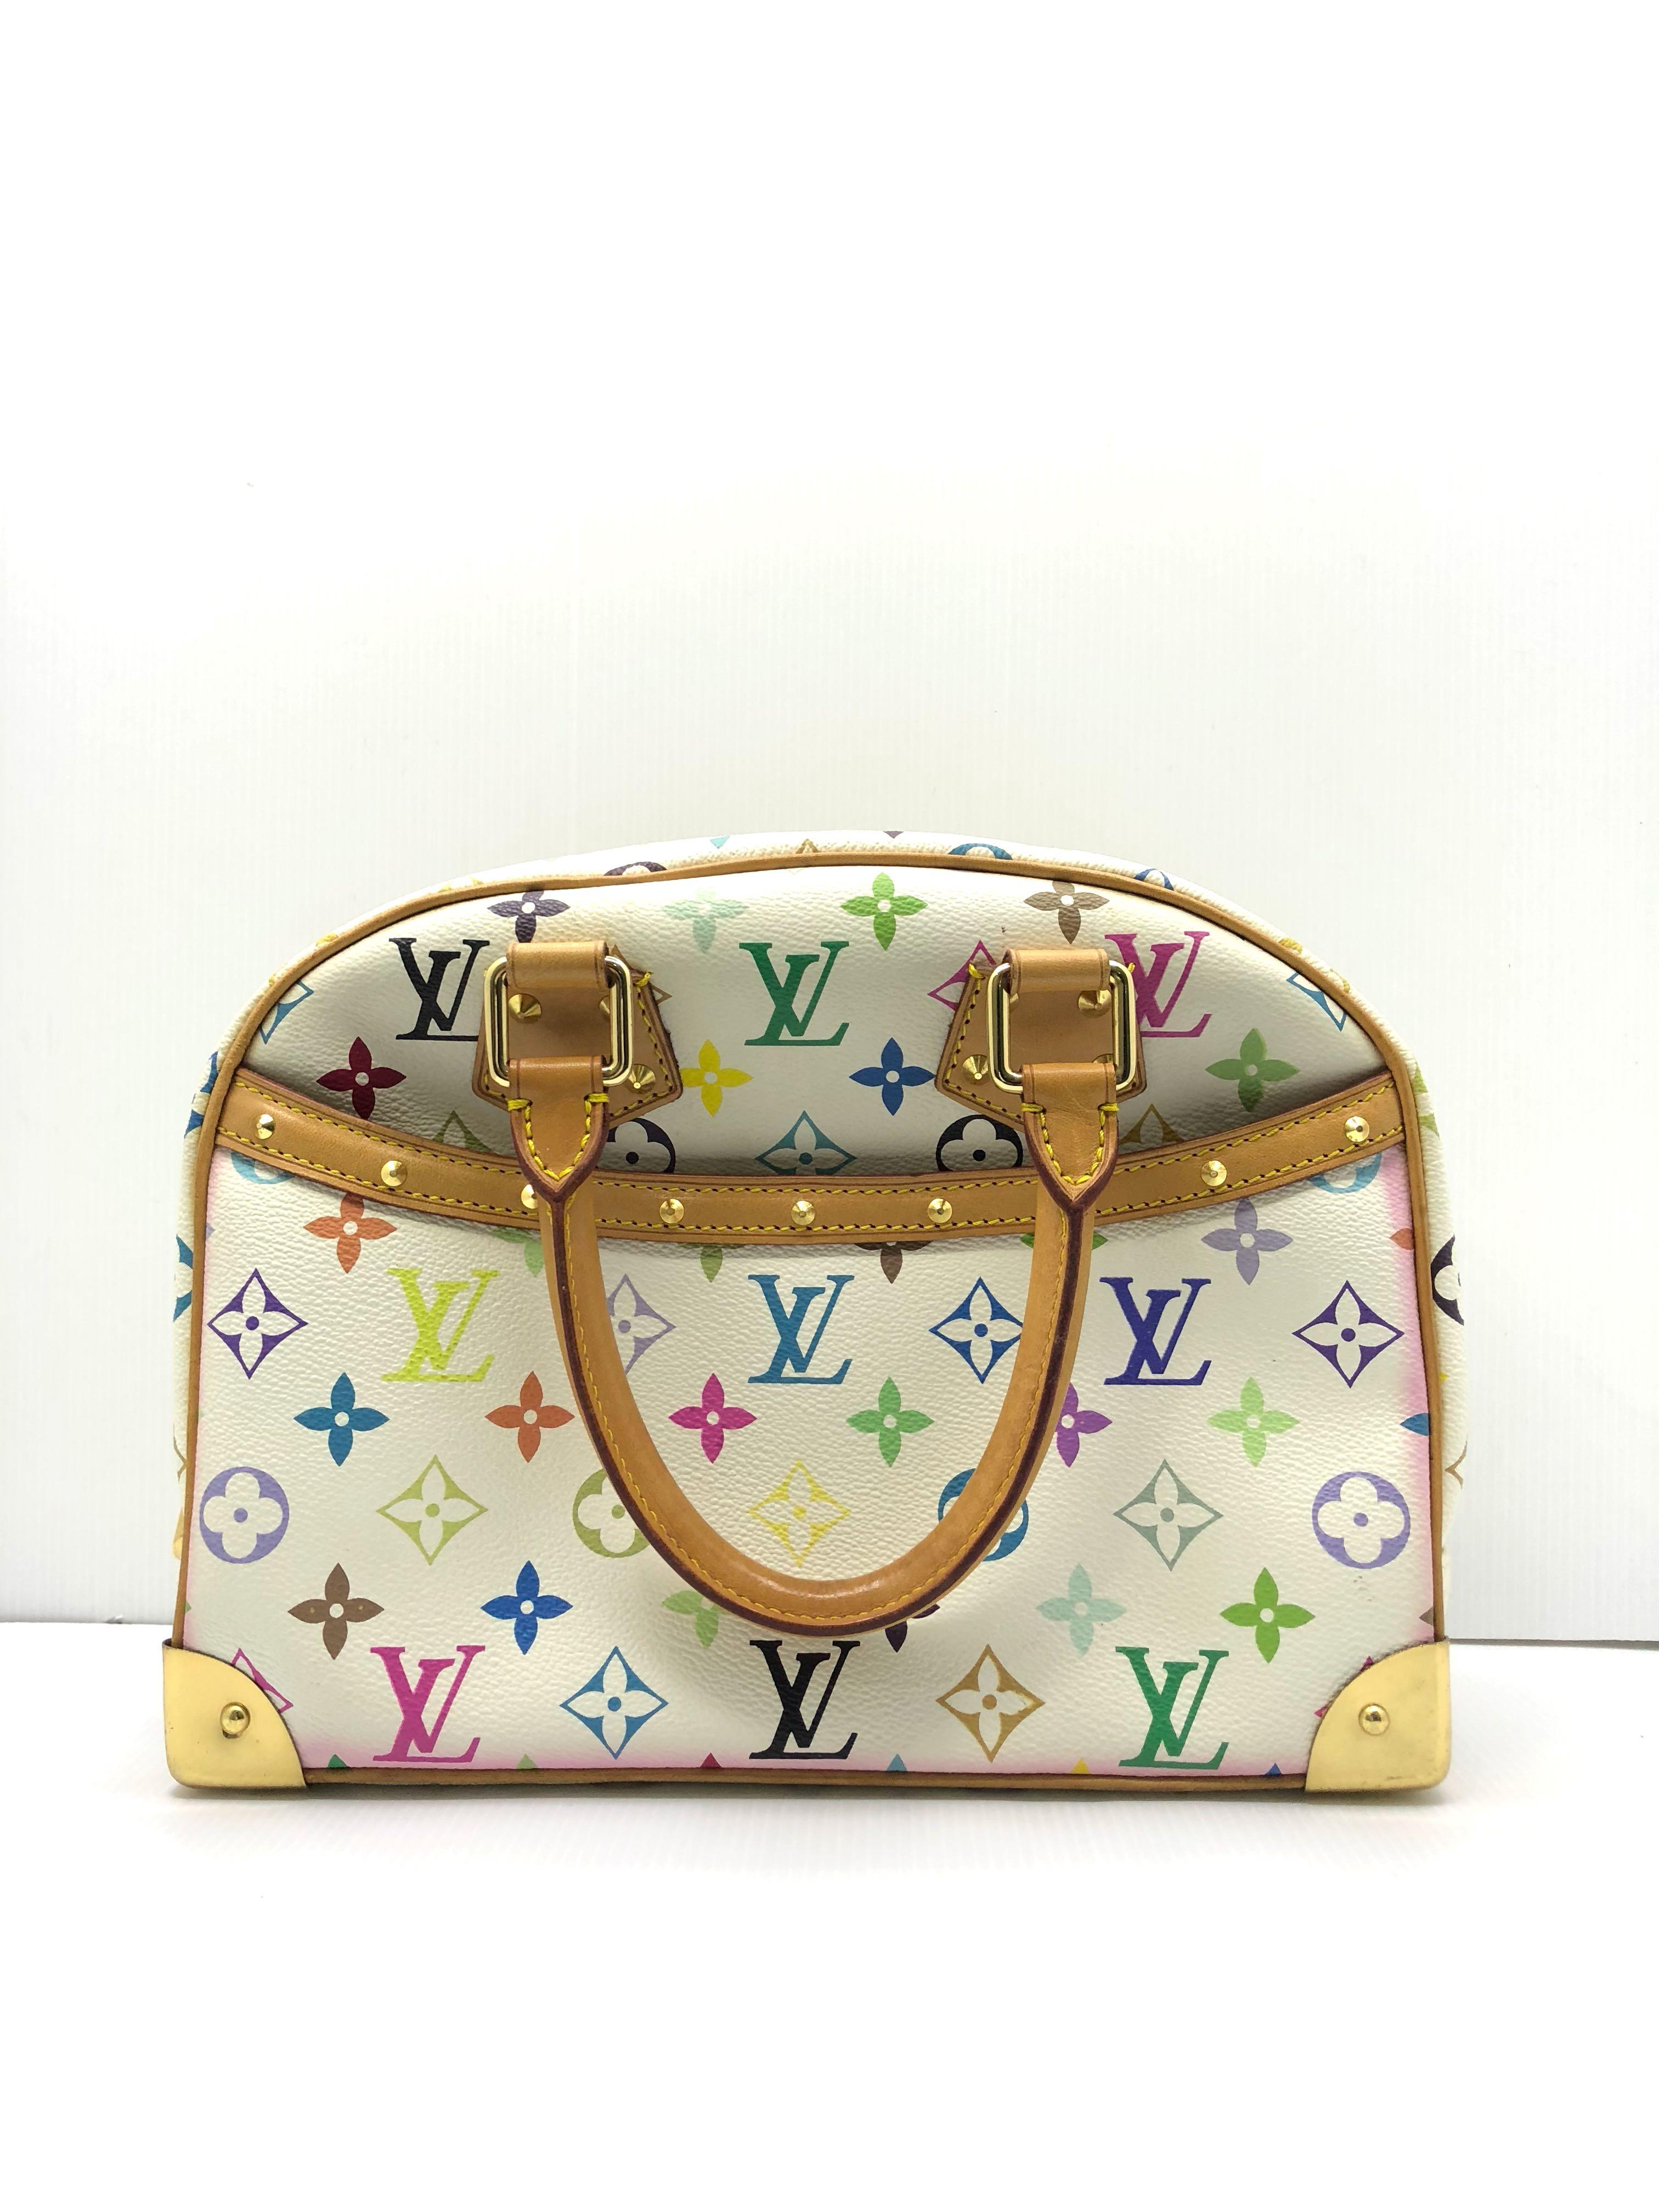 Louis Vuitton Handbags In Garden State Plaza | Literacy Basics